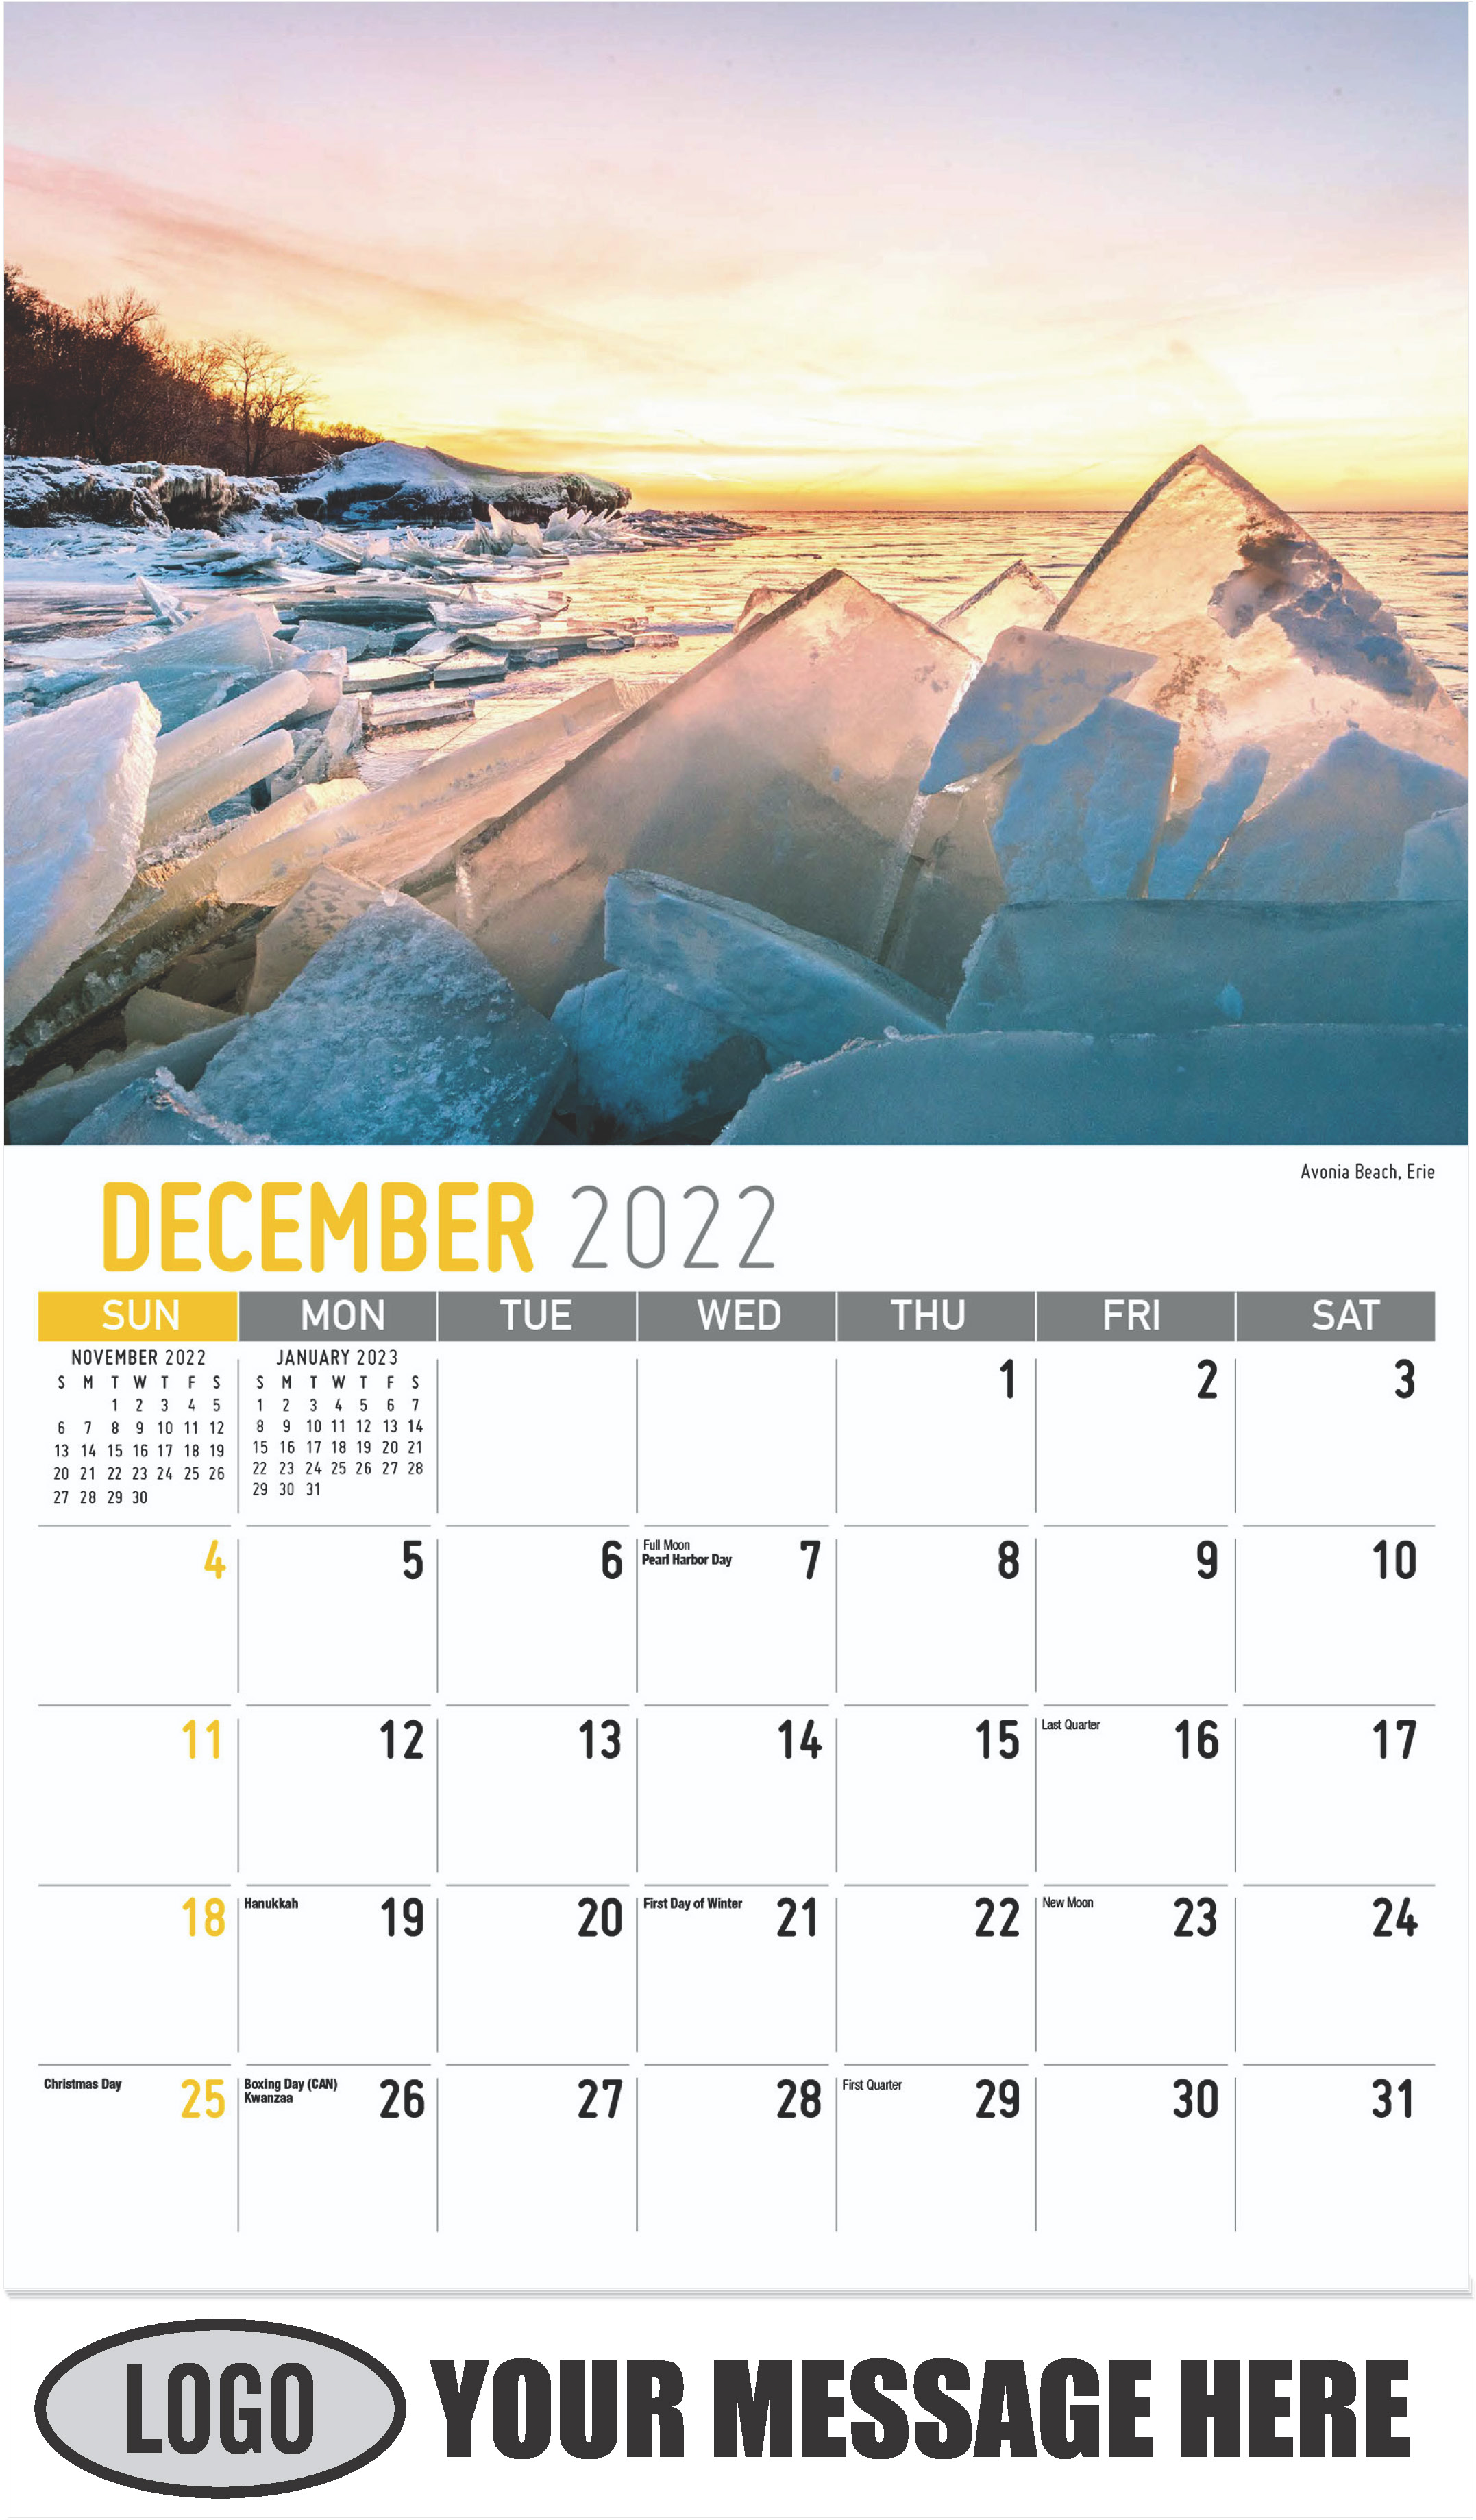 Avonia Beach, Erie - December 2022 - Scenes of Pennsylvania 2023 Promotional Calendar